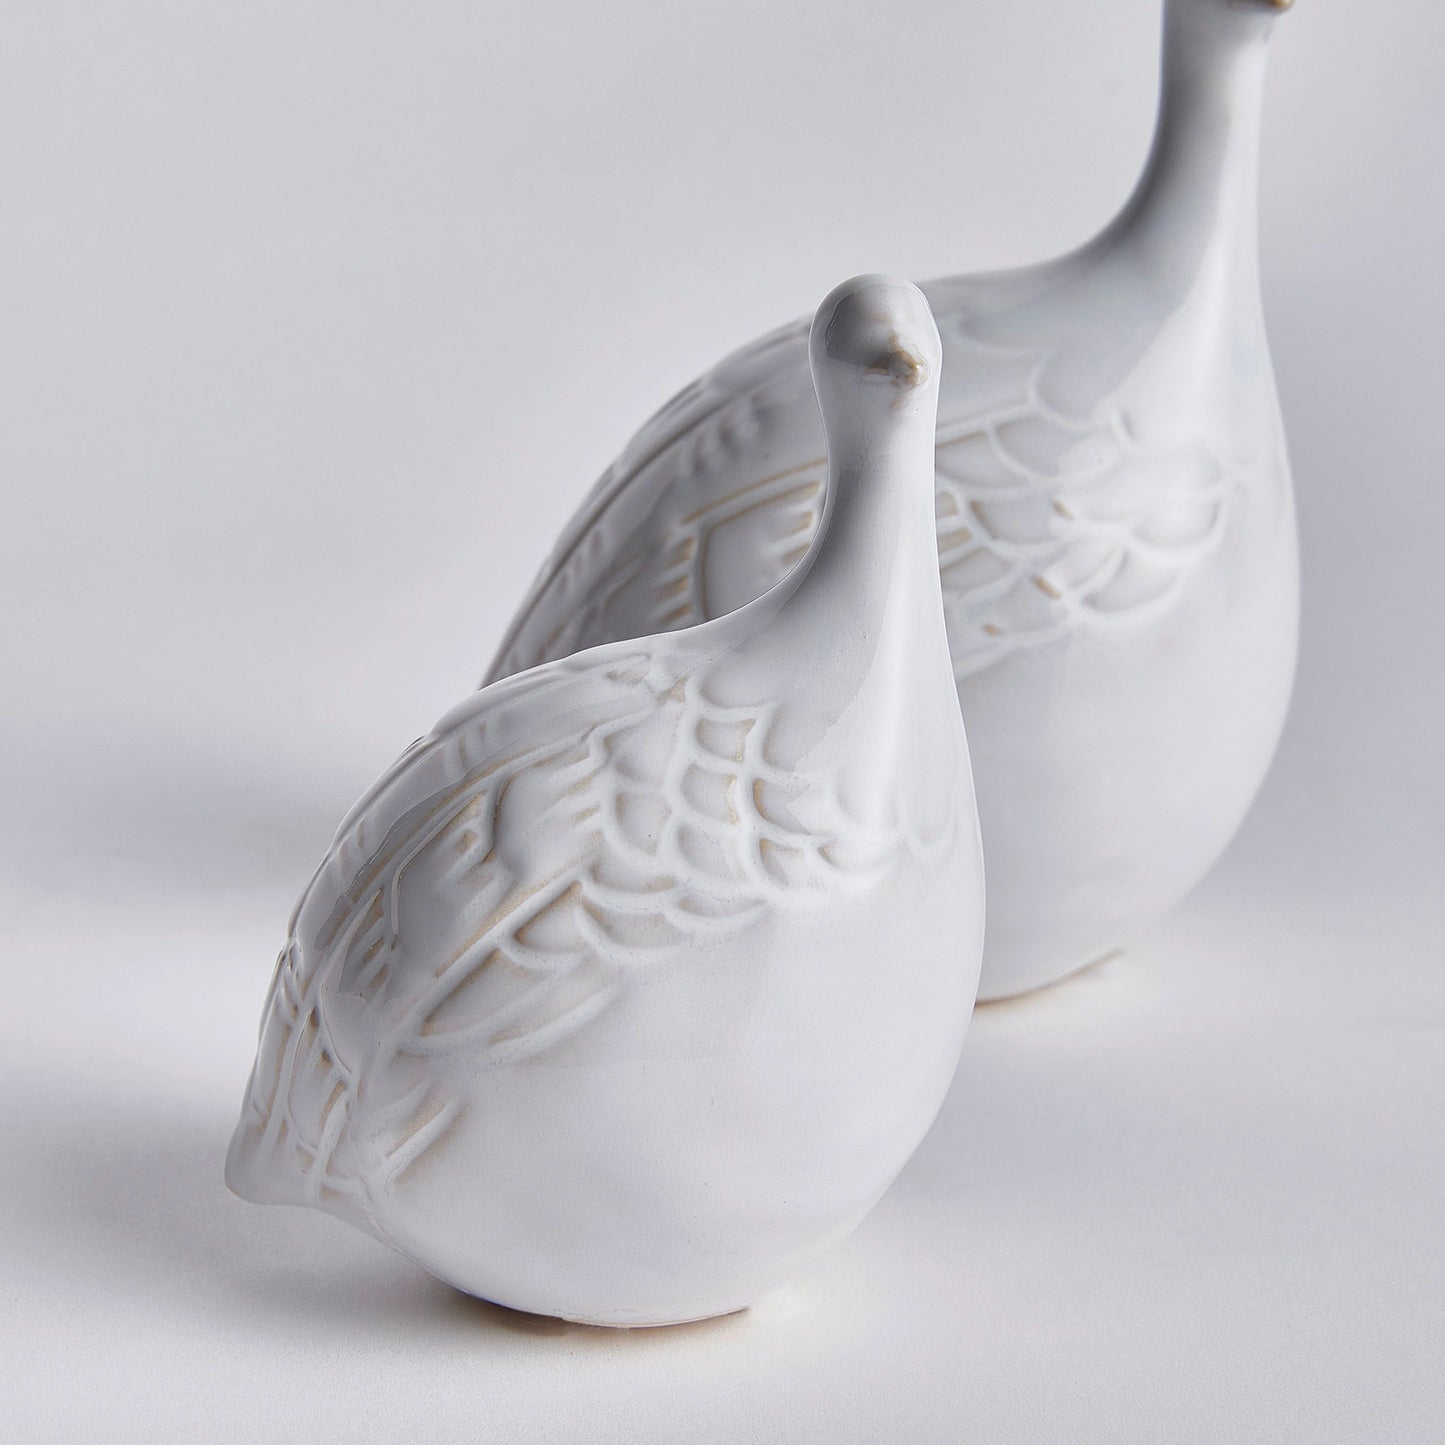 Decorative ceramic bird objects on white background closeup.